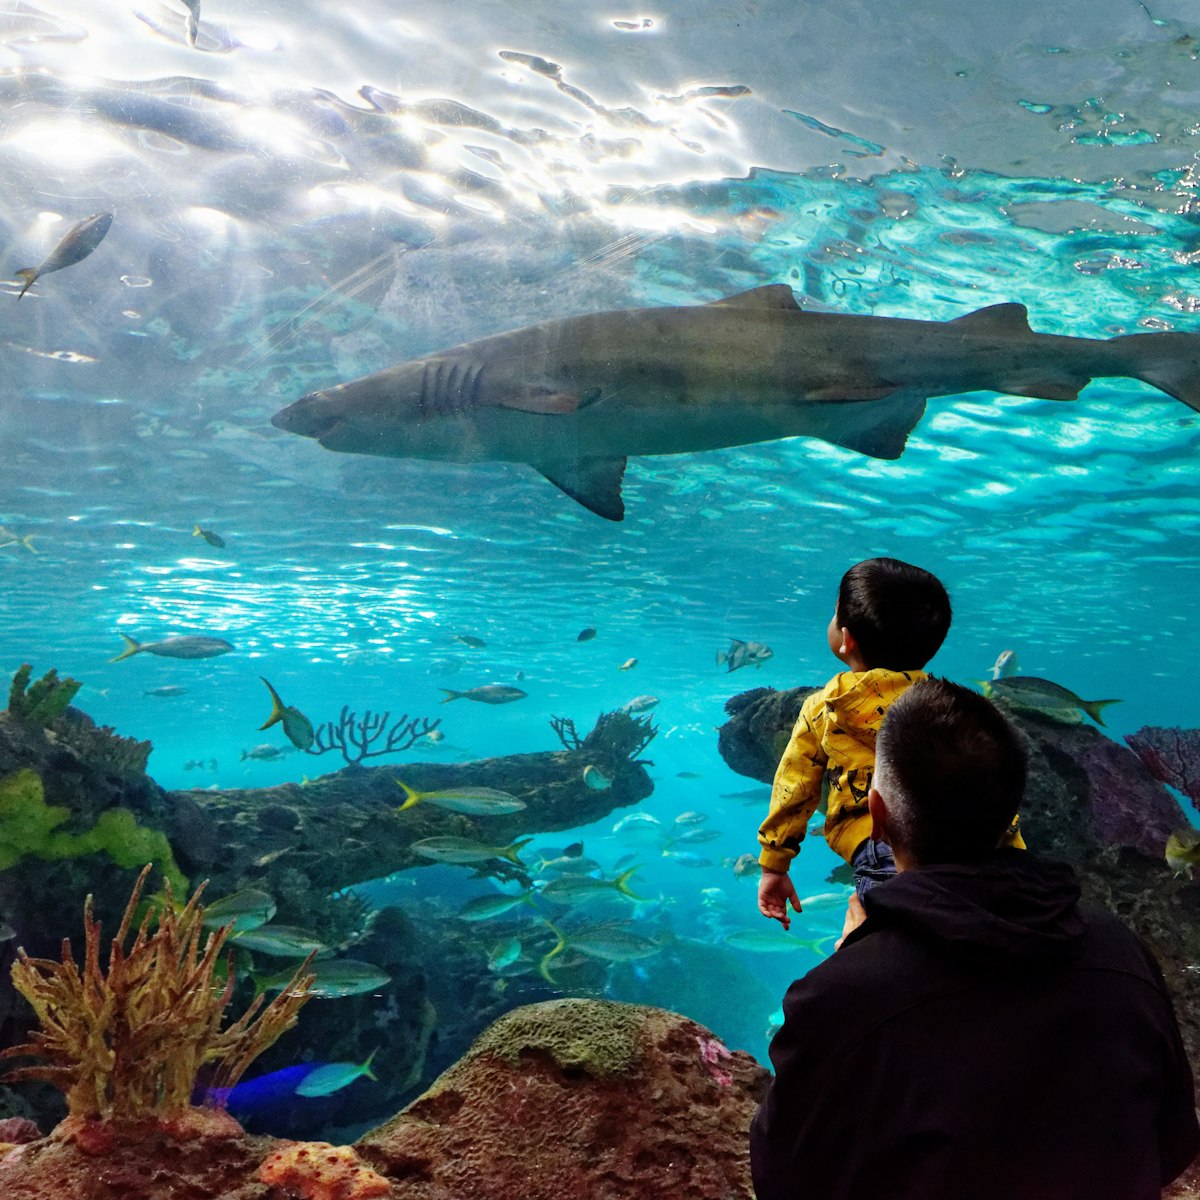 NOVEMBER 15, 2018: A man holds his son up to see the sand tiger shark inside Ripley's Aquarium of Canada.
1347903638
aquarium, blue-nurse sand tiger, boy, canada, carcharias taurus, dangerous lagoon, family, grey nurse shark, holds, inside, interior, man, ontario, ripleys, sand tiger shark, shark, son, spotted ragged-tooth shark, tank, toronto, tunnel